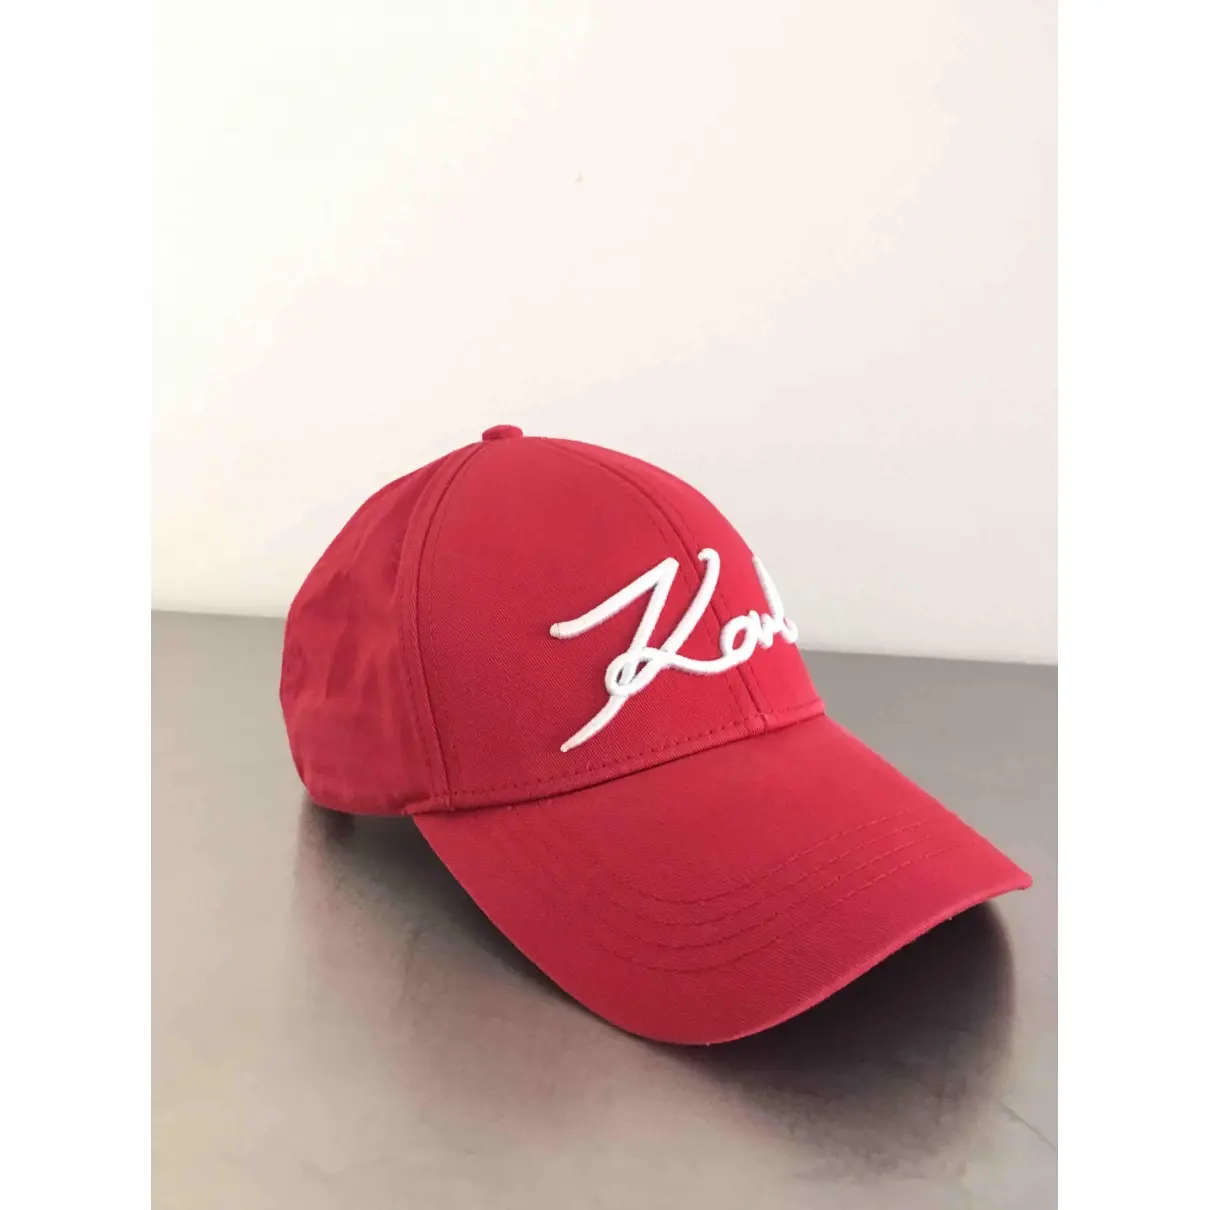 Karl Hat for sale